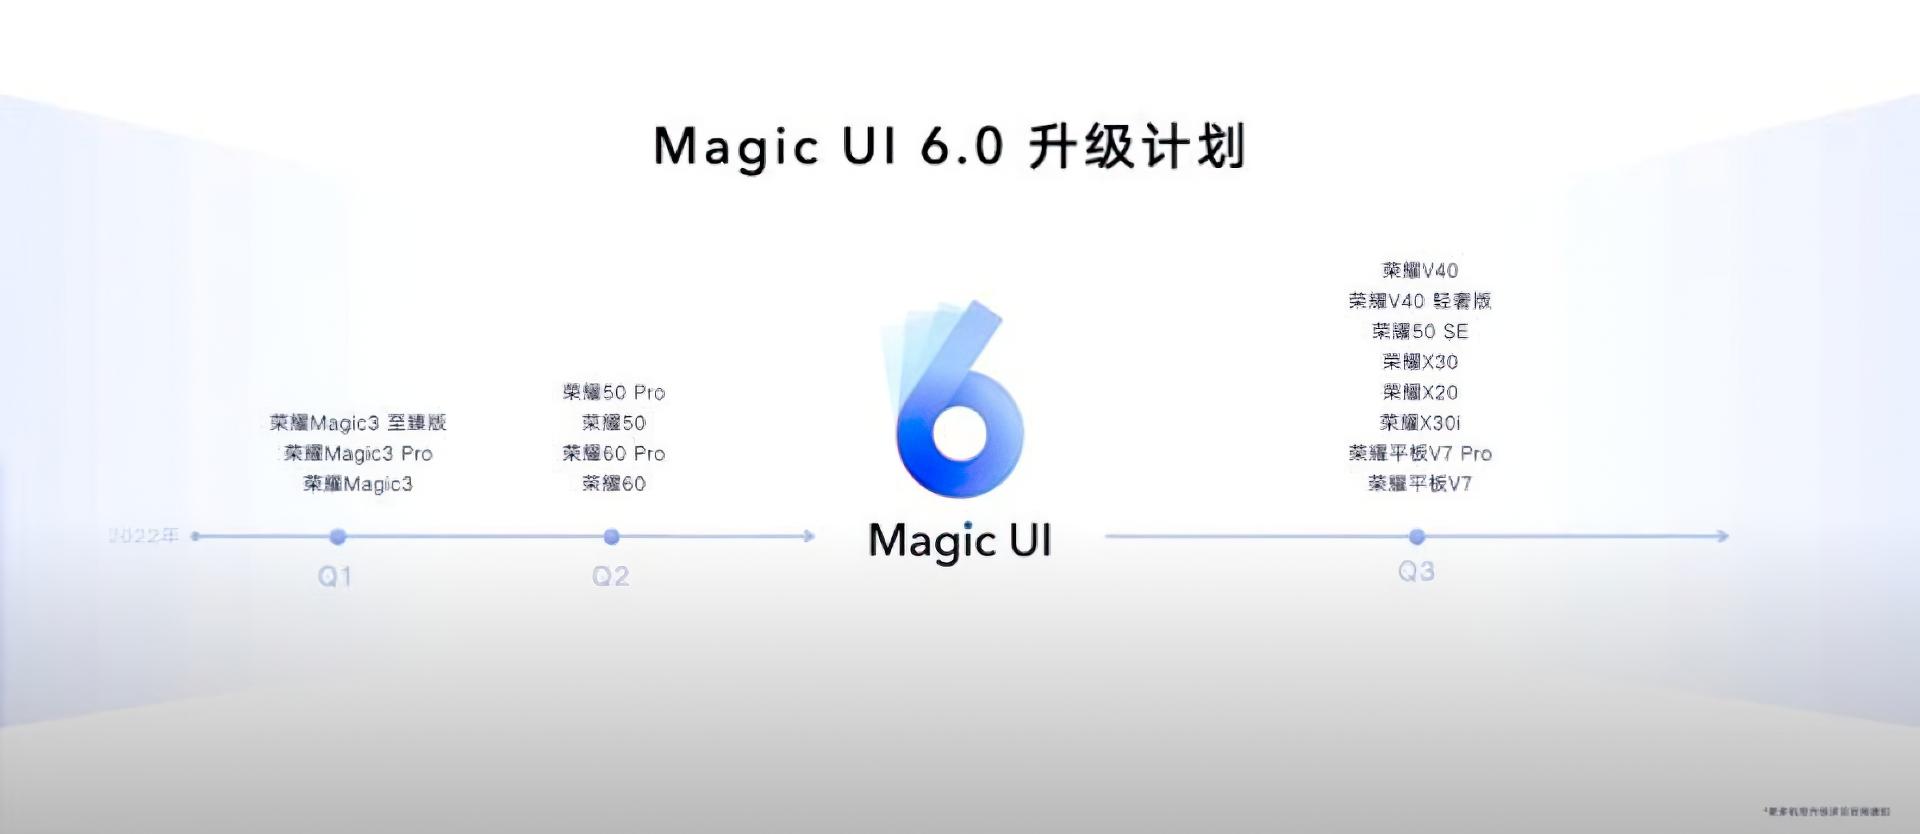 HONOR 6 Обновит эти смартфоны до Magic UI 6.0